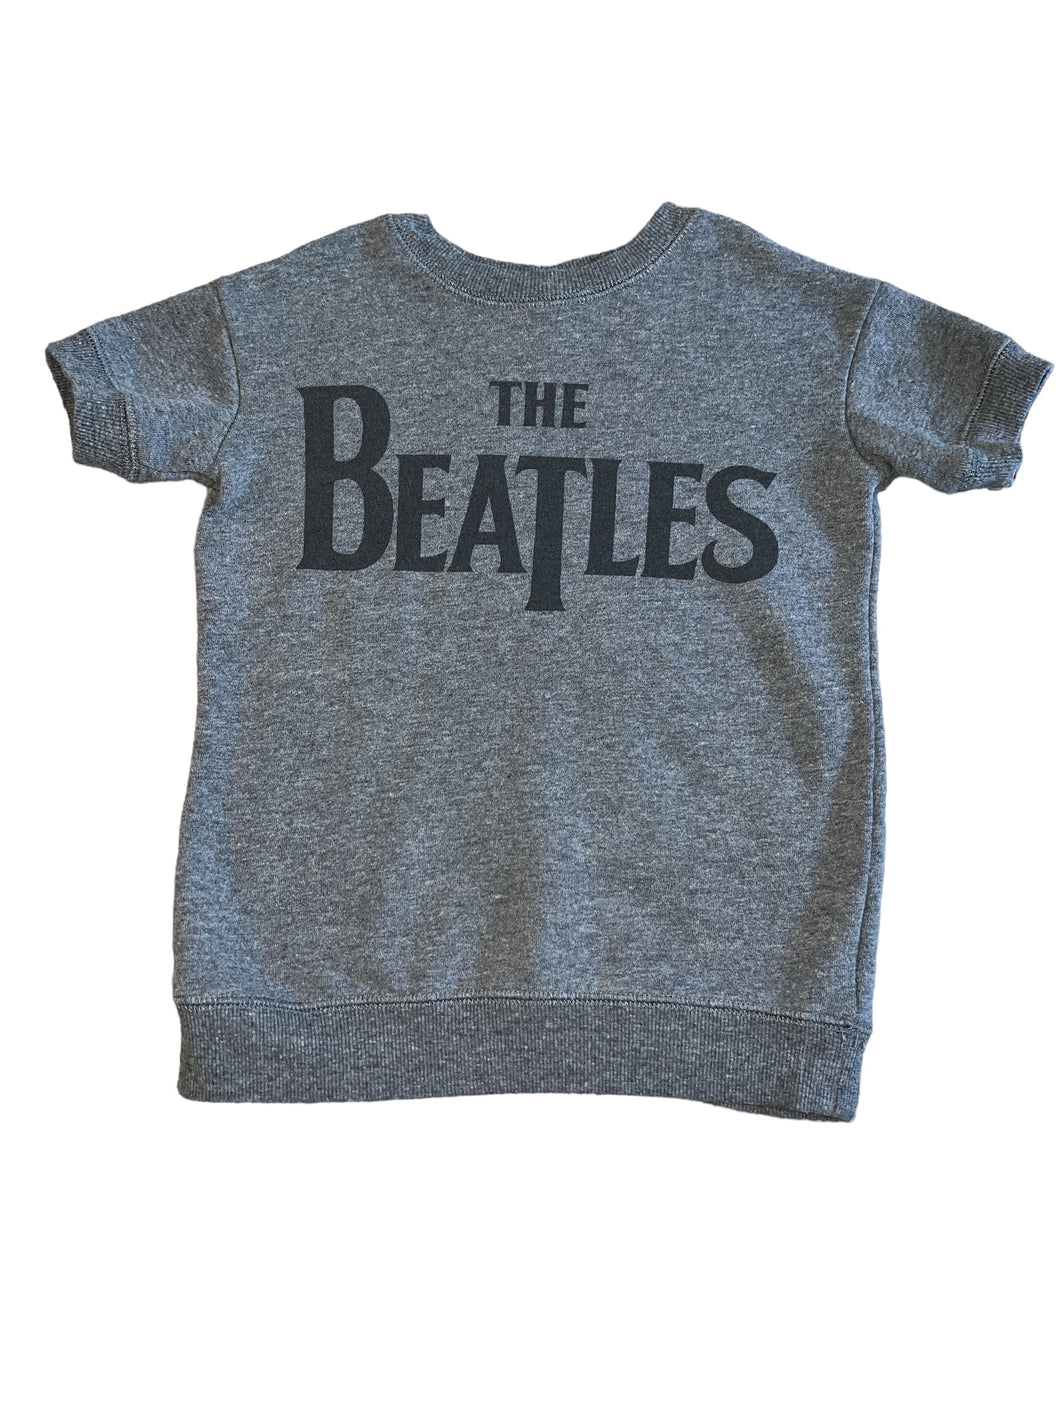 Junk Food girls short sleeve Beatles sweatshirt top S (6-7)